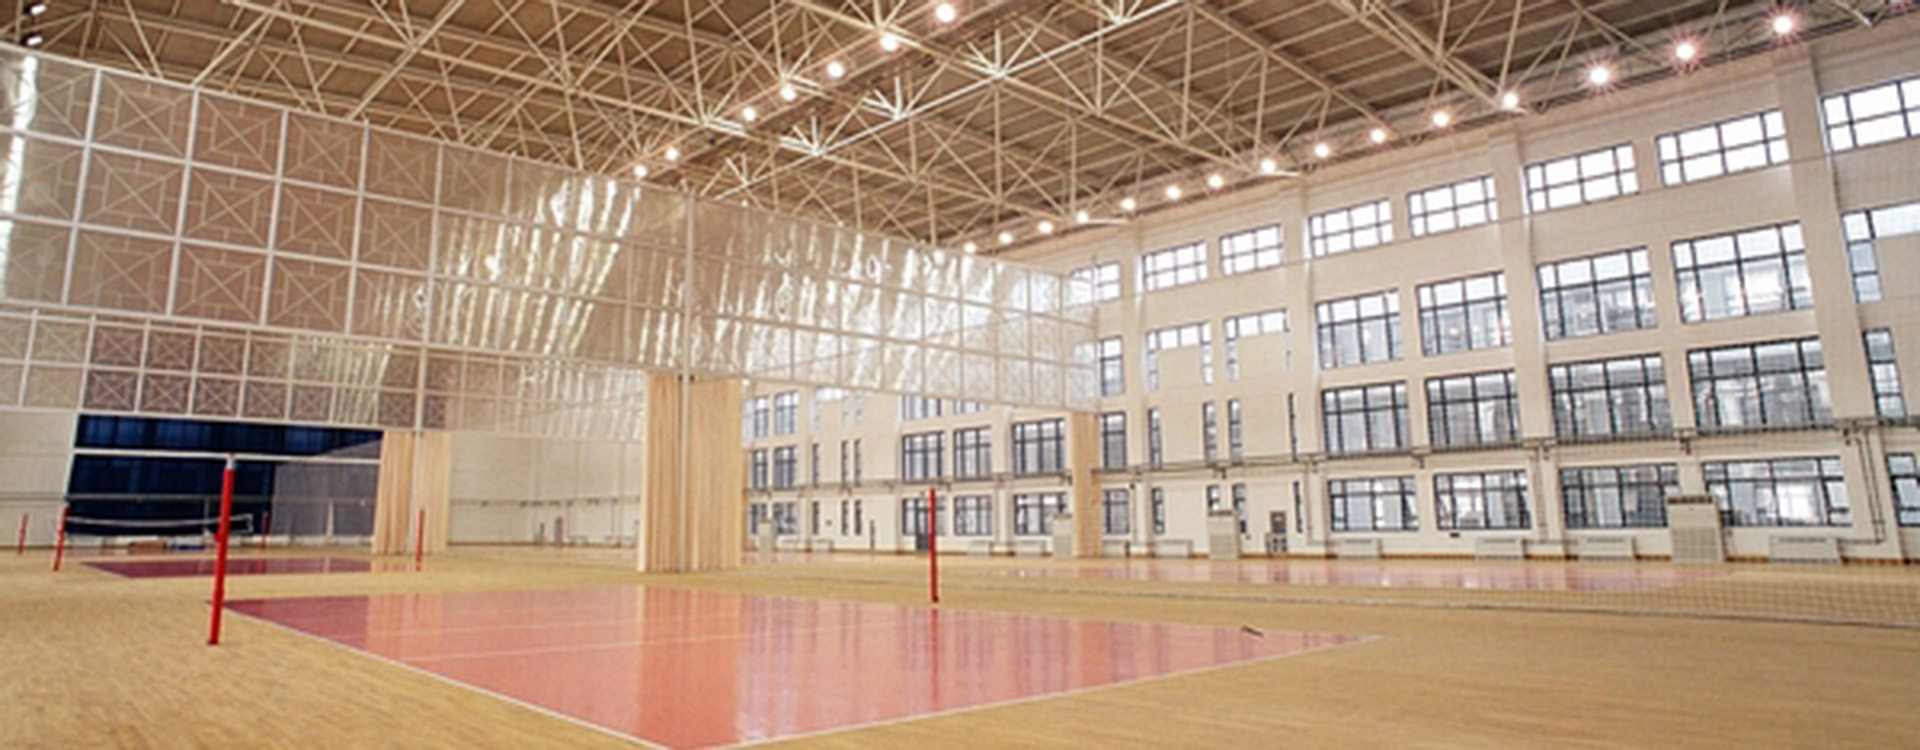 Boleibol Court3